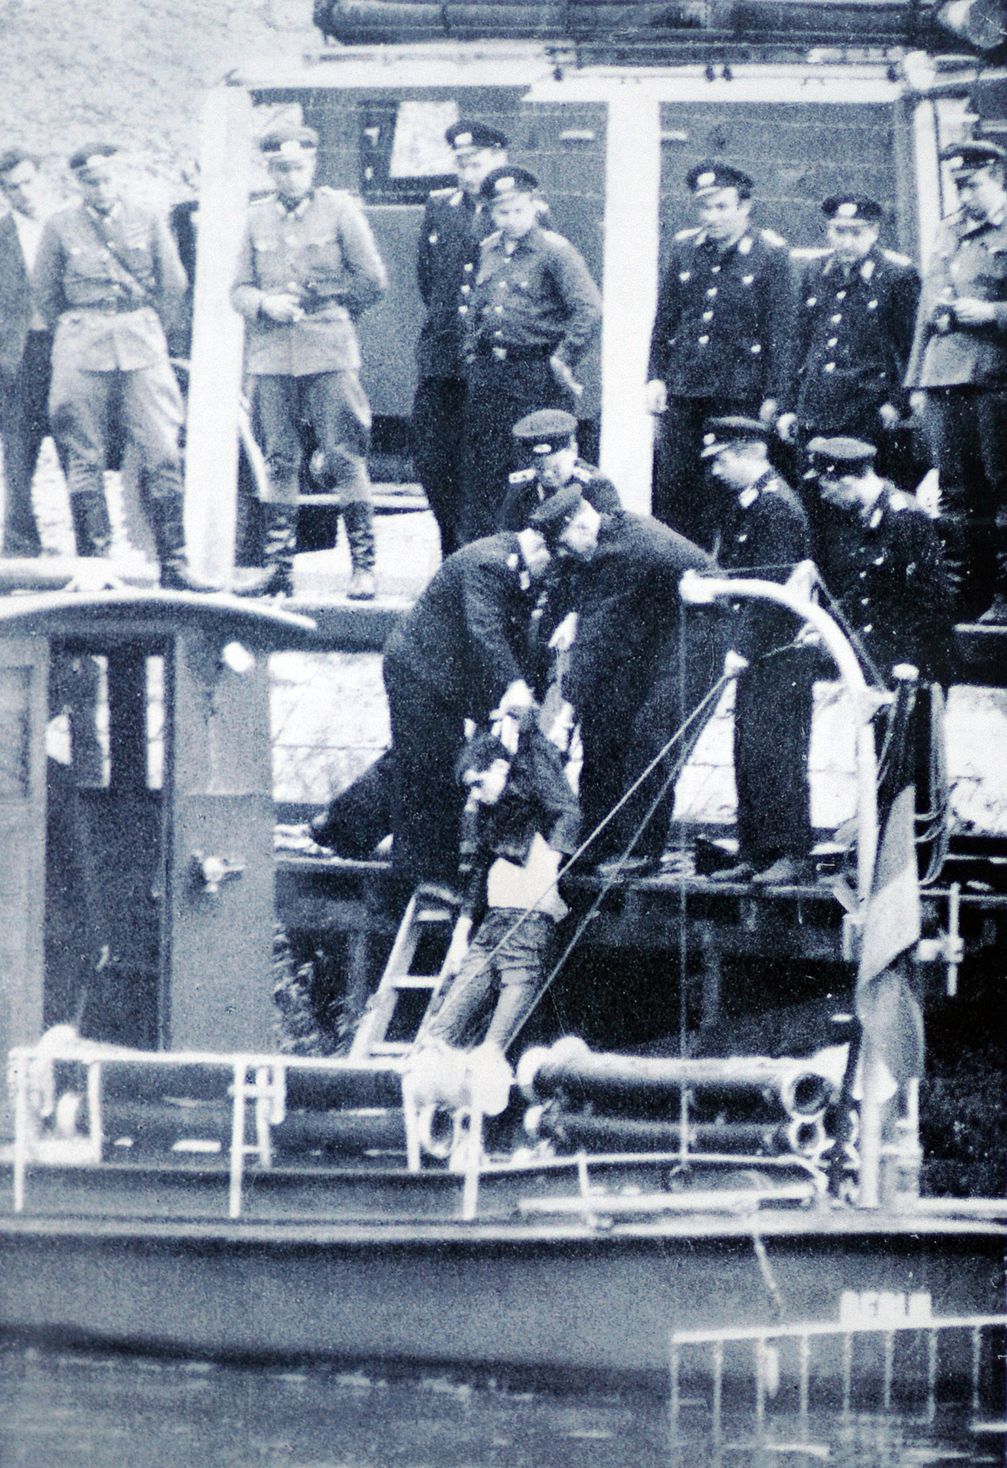 Bergung des erschossenen Günter Litfin aus dem Becken des Humboldthafens am 24. August 1961